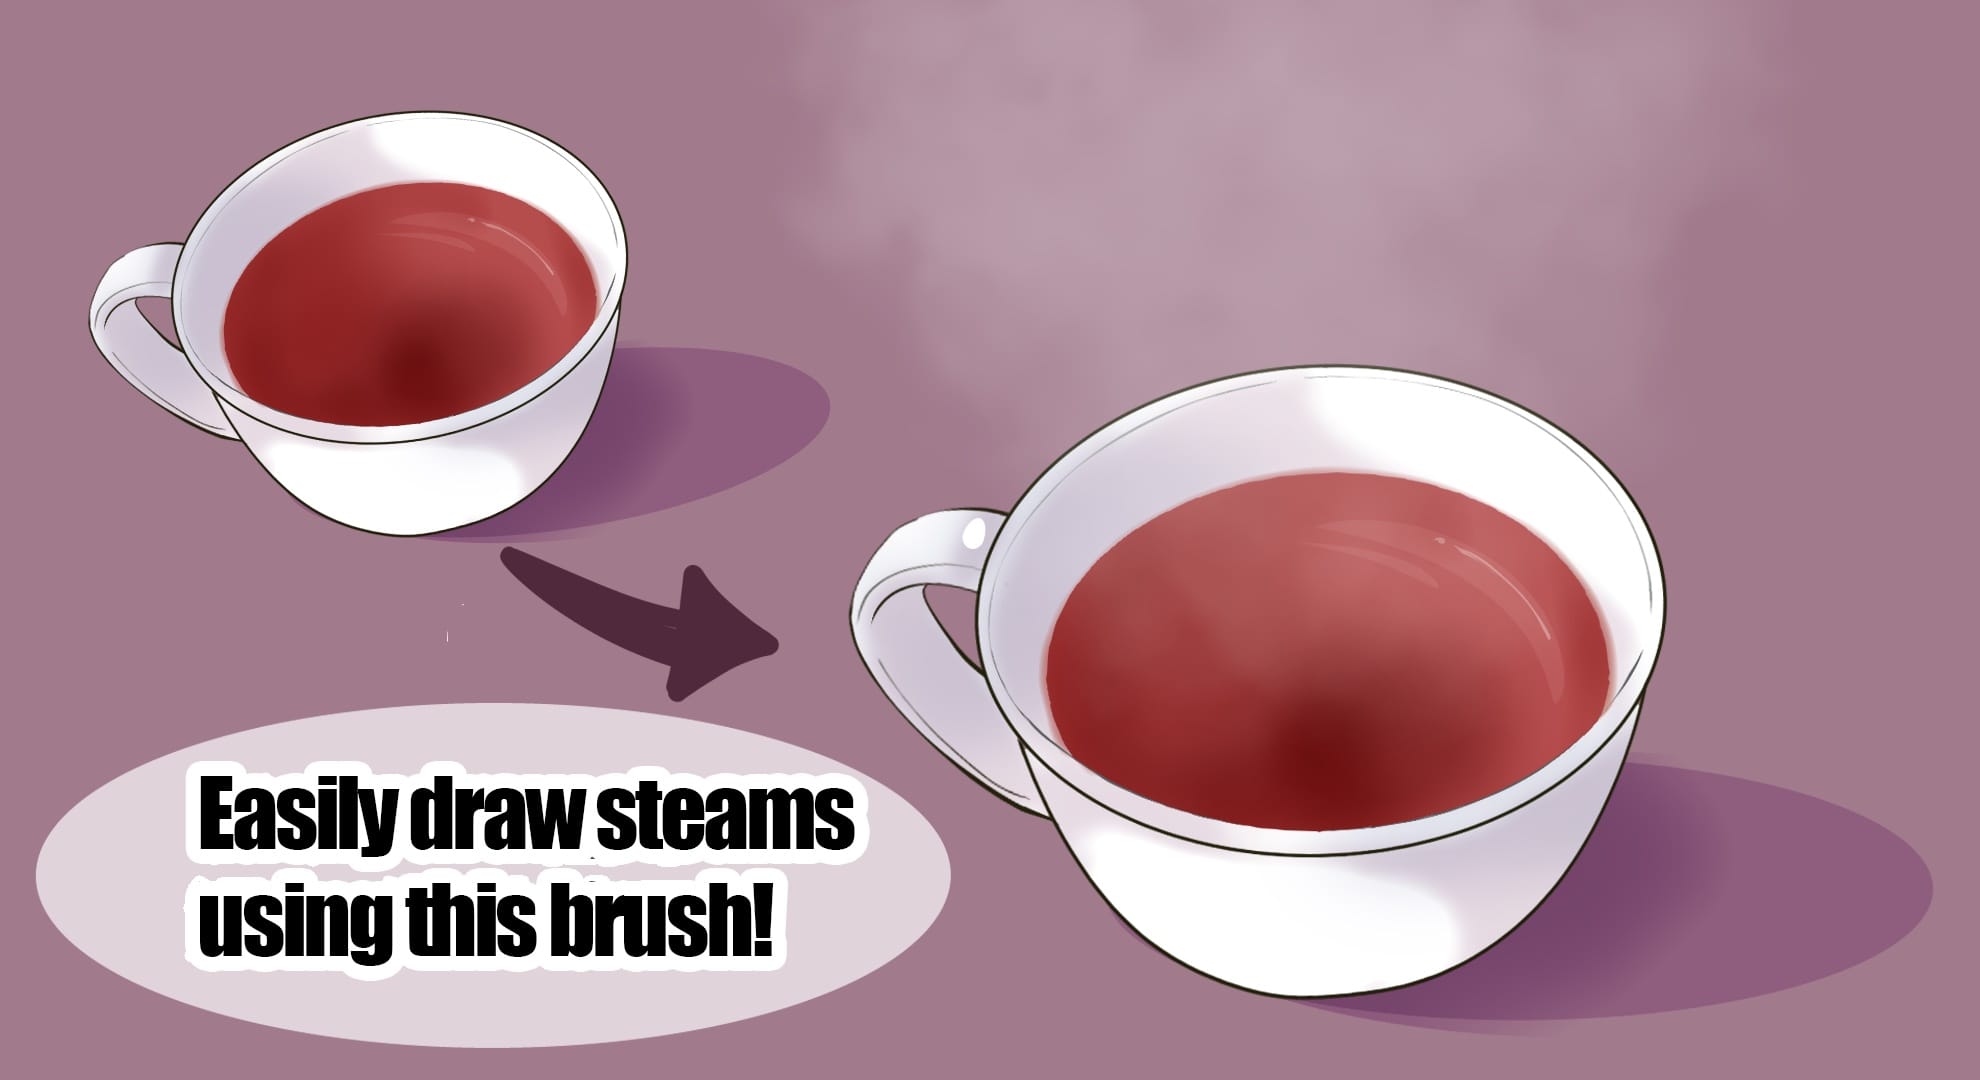 Draw It! on Steam